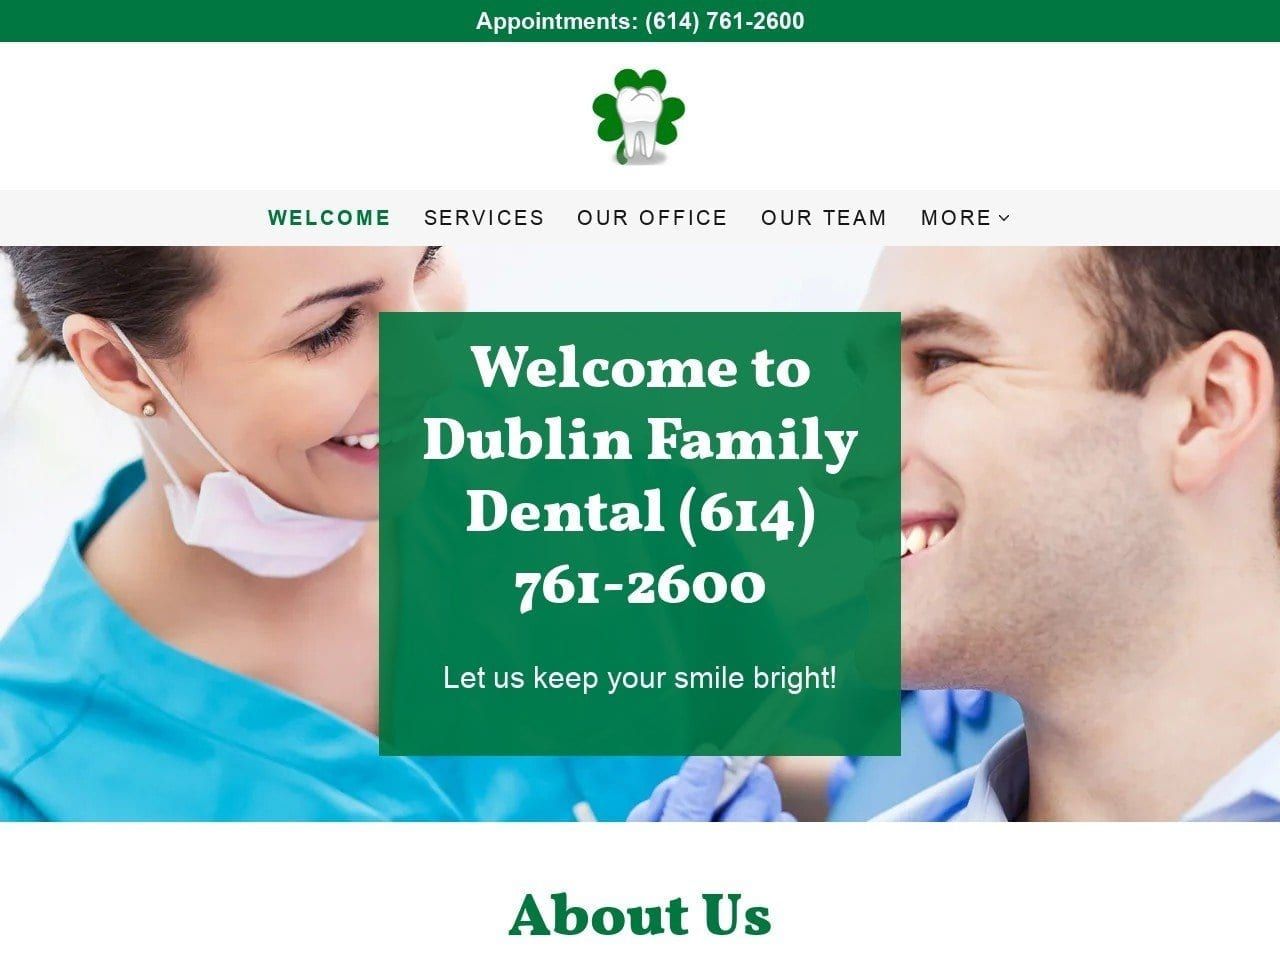 Dublin Family Dental Website Screenshot from dublinfamilydentalohio.com